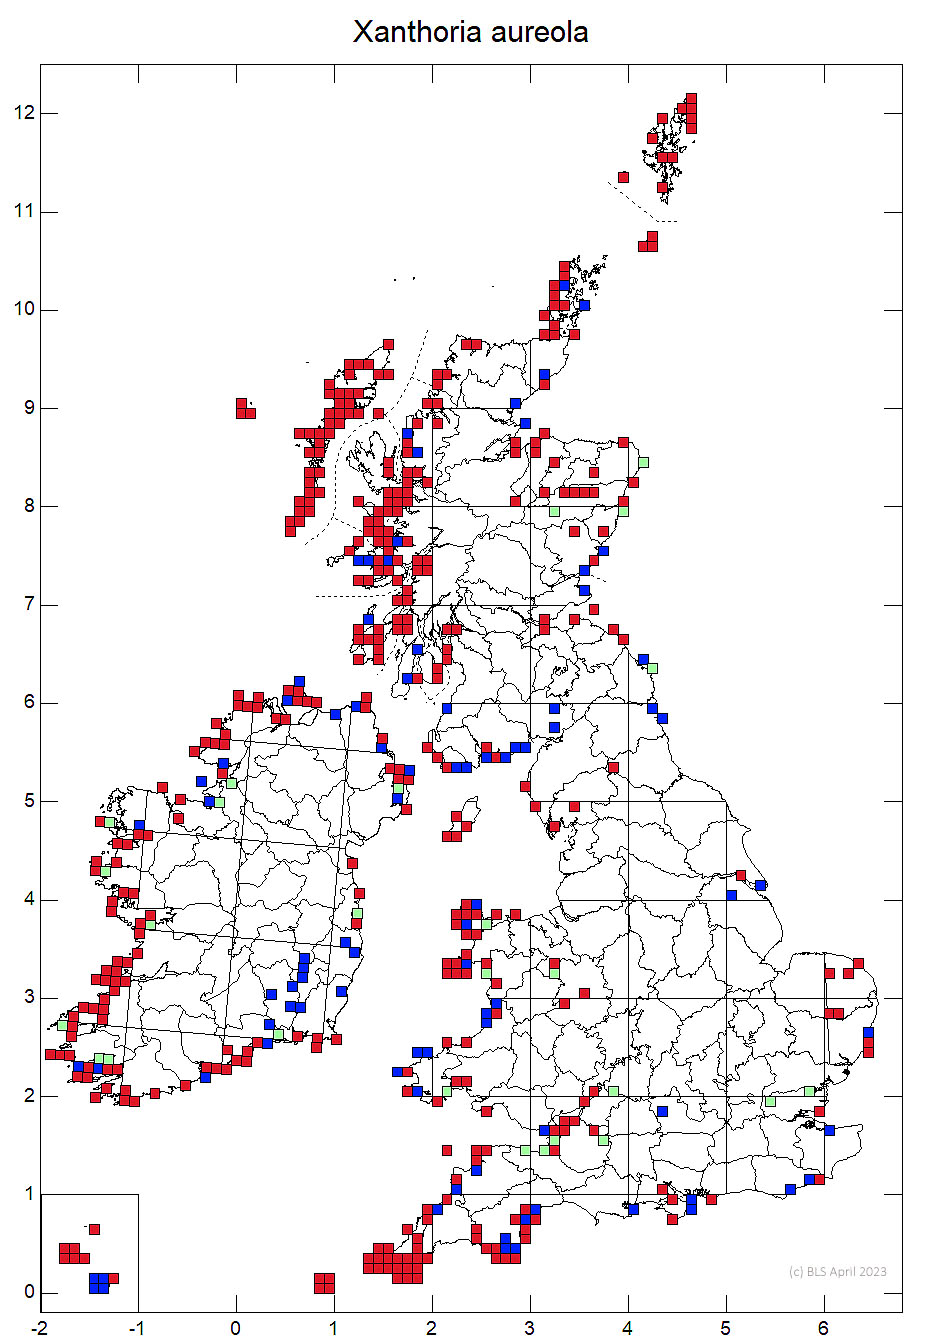 Xanthoria aureola 10km sq distribution map